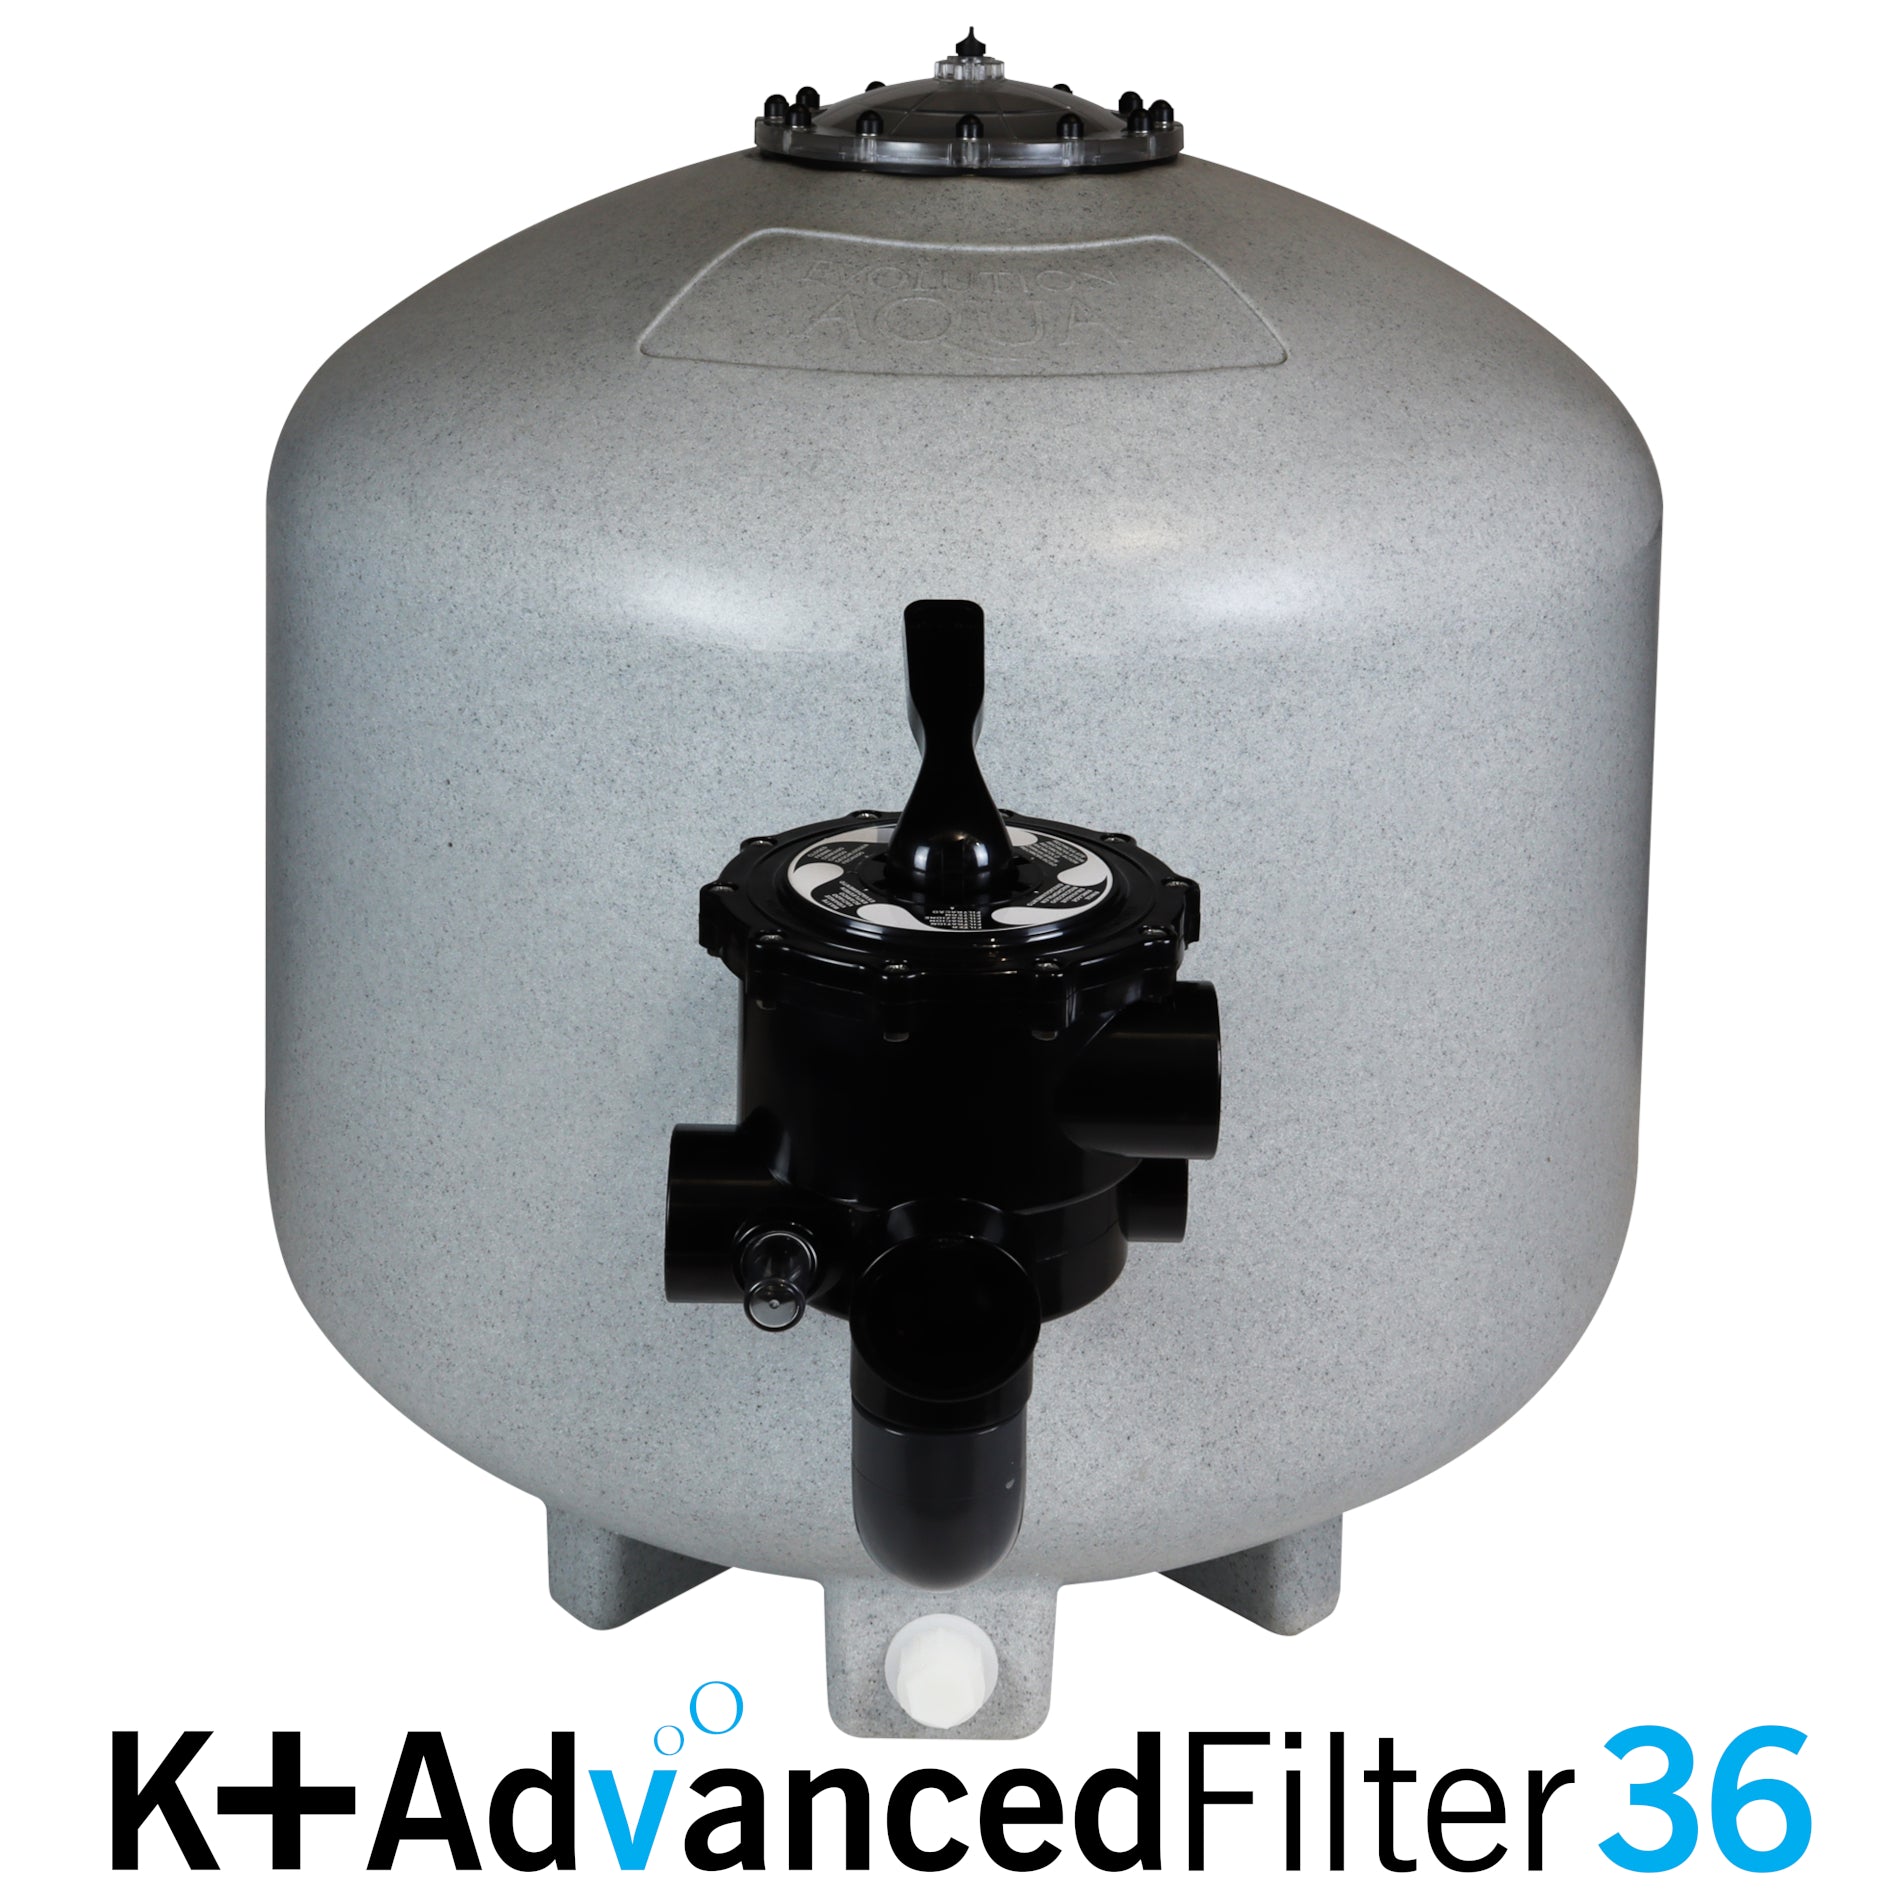 Evolution Aqua Pressure Pond K+ Advanced Filter 36